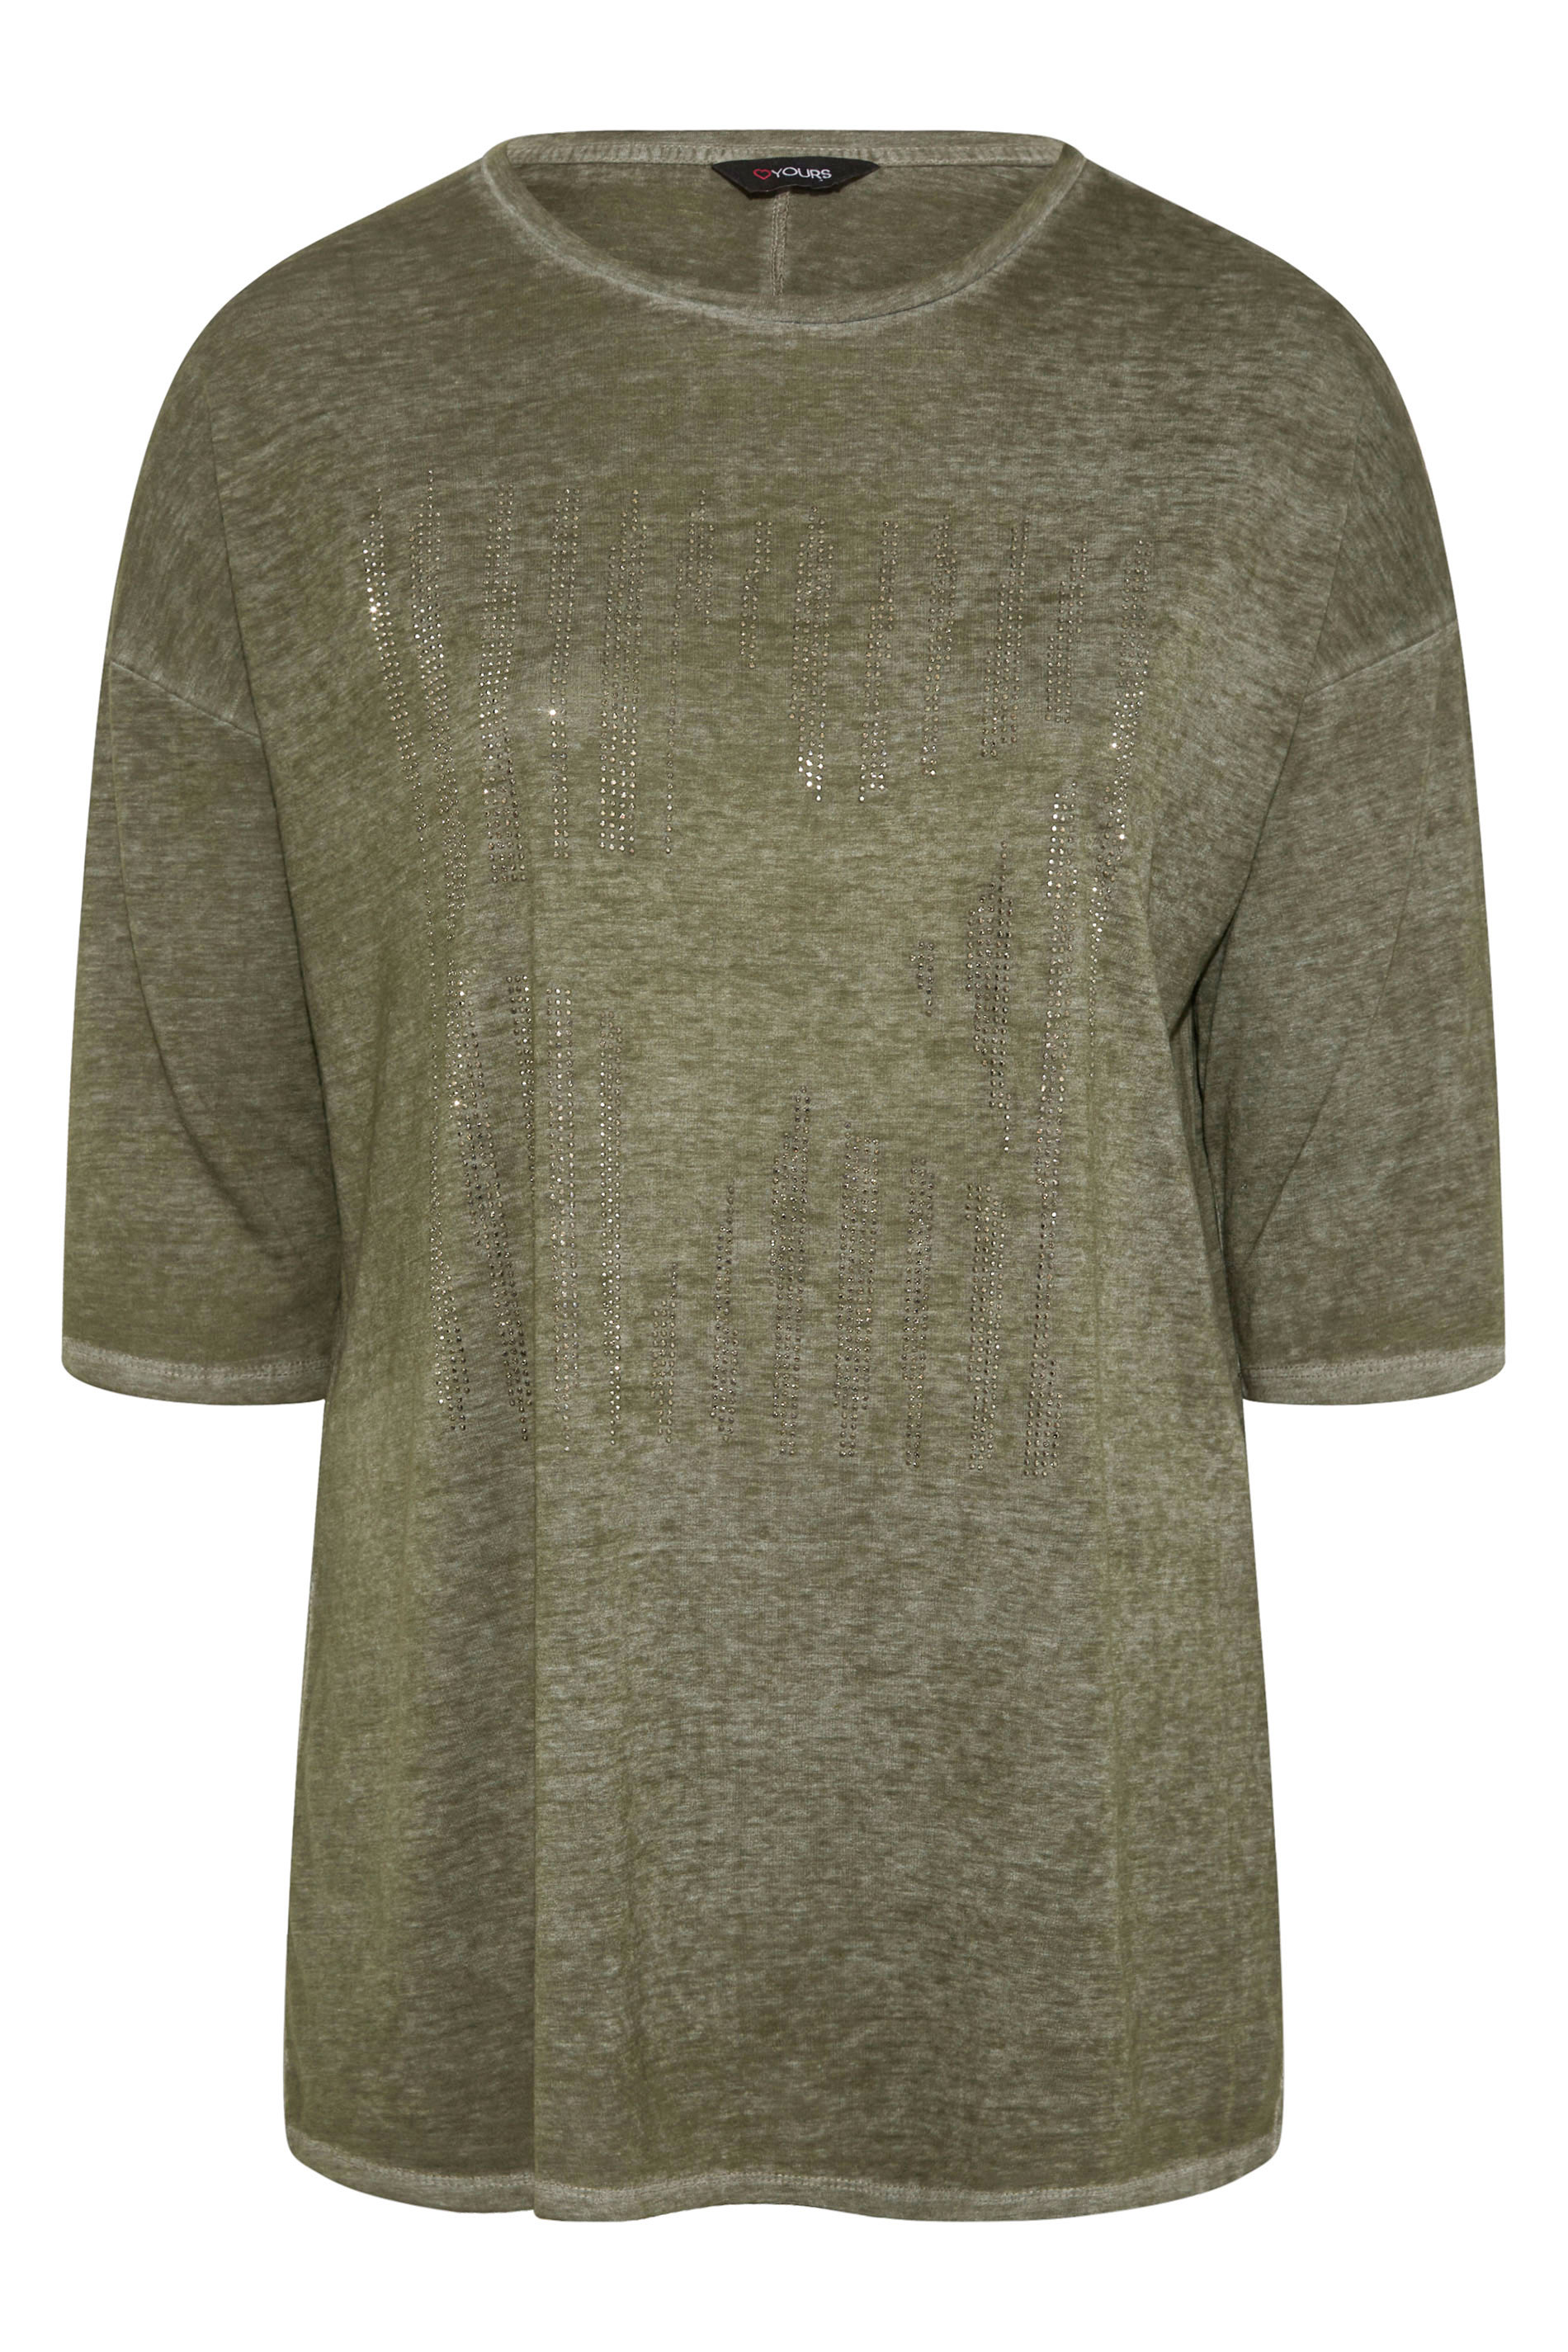 Grande taille  Tops Grande taille  T-Shirts | T-Shirt Vert Kaki Ample en Jersey - EI87448